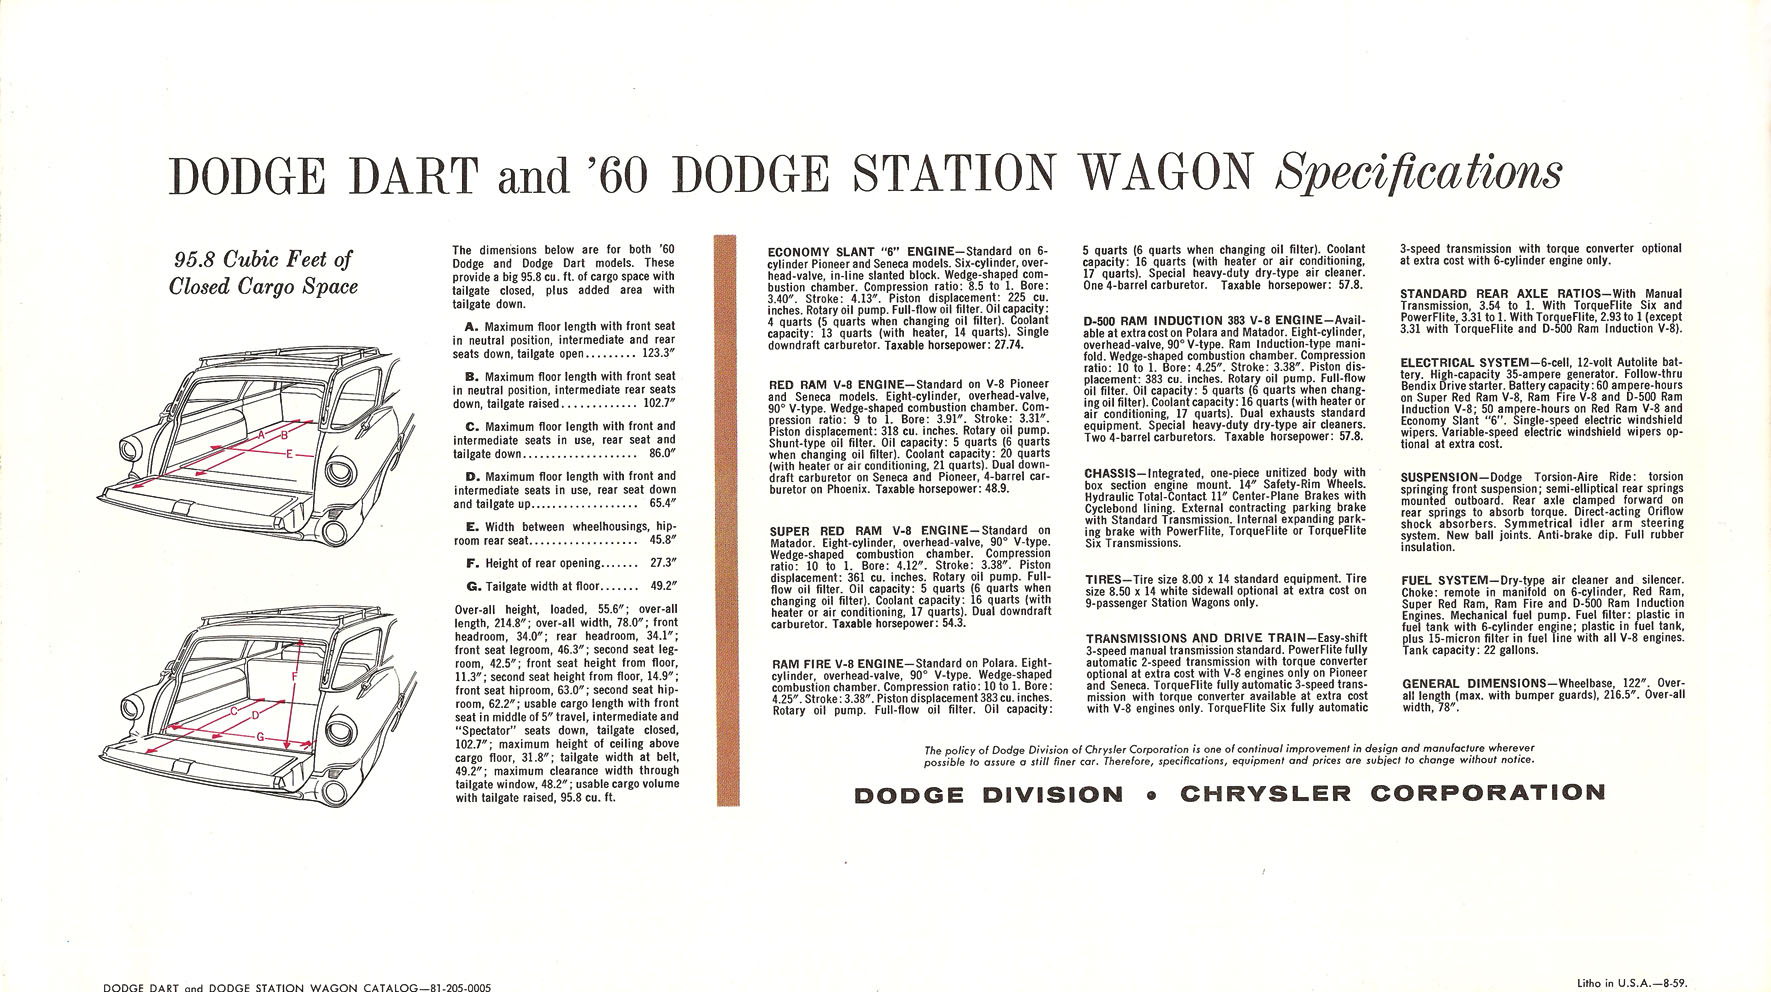 1960_Dodge_Wagons-13